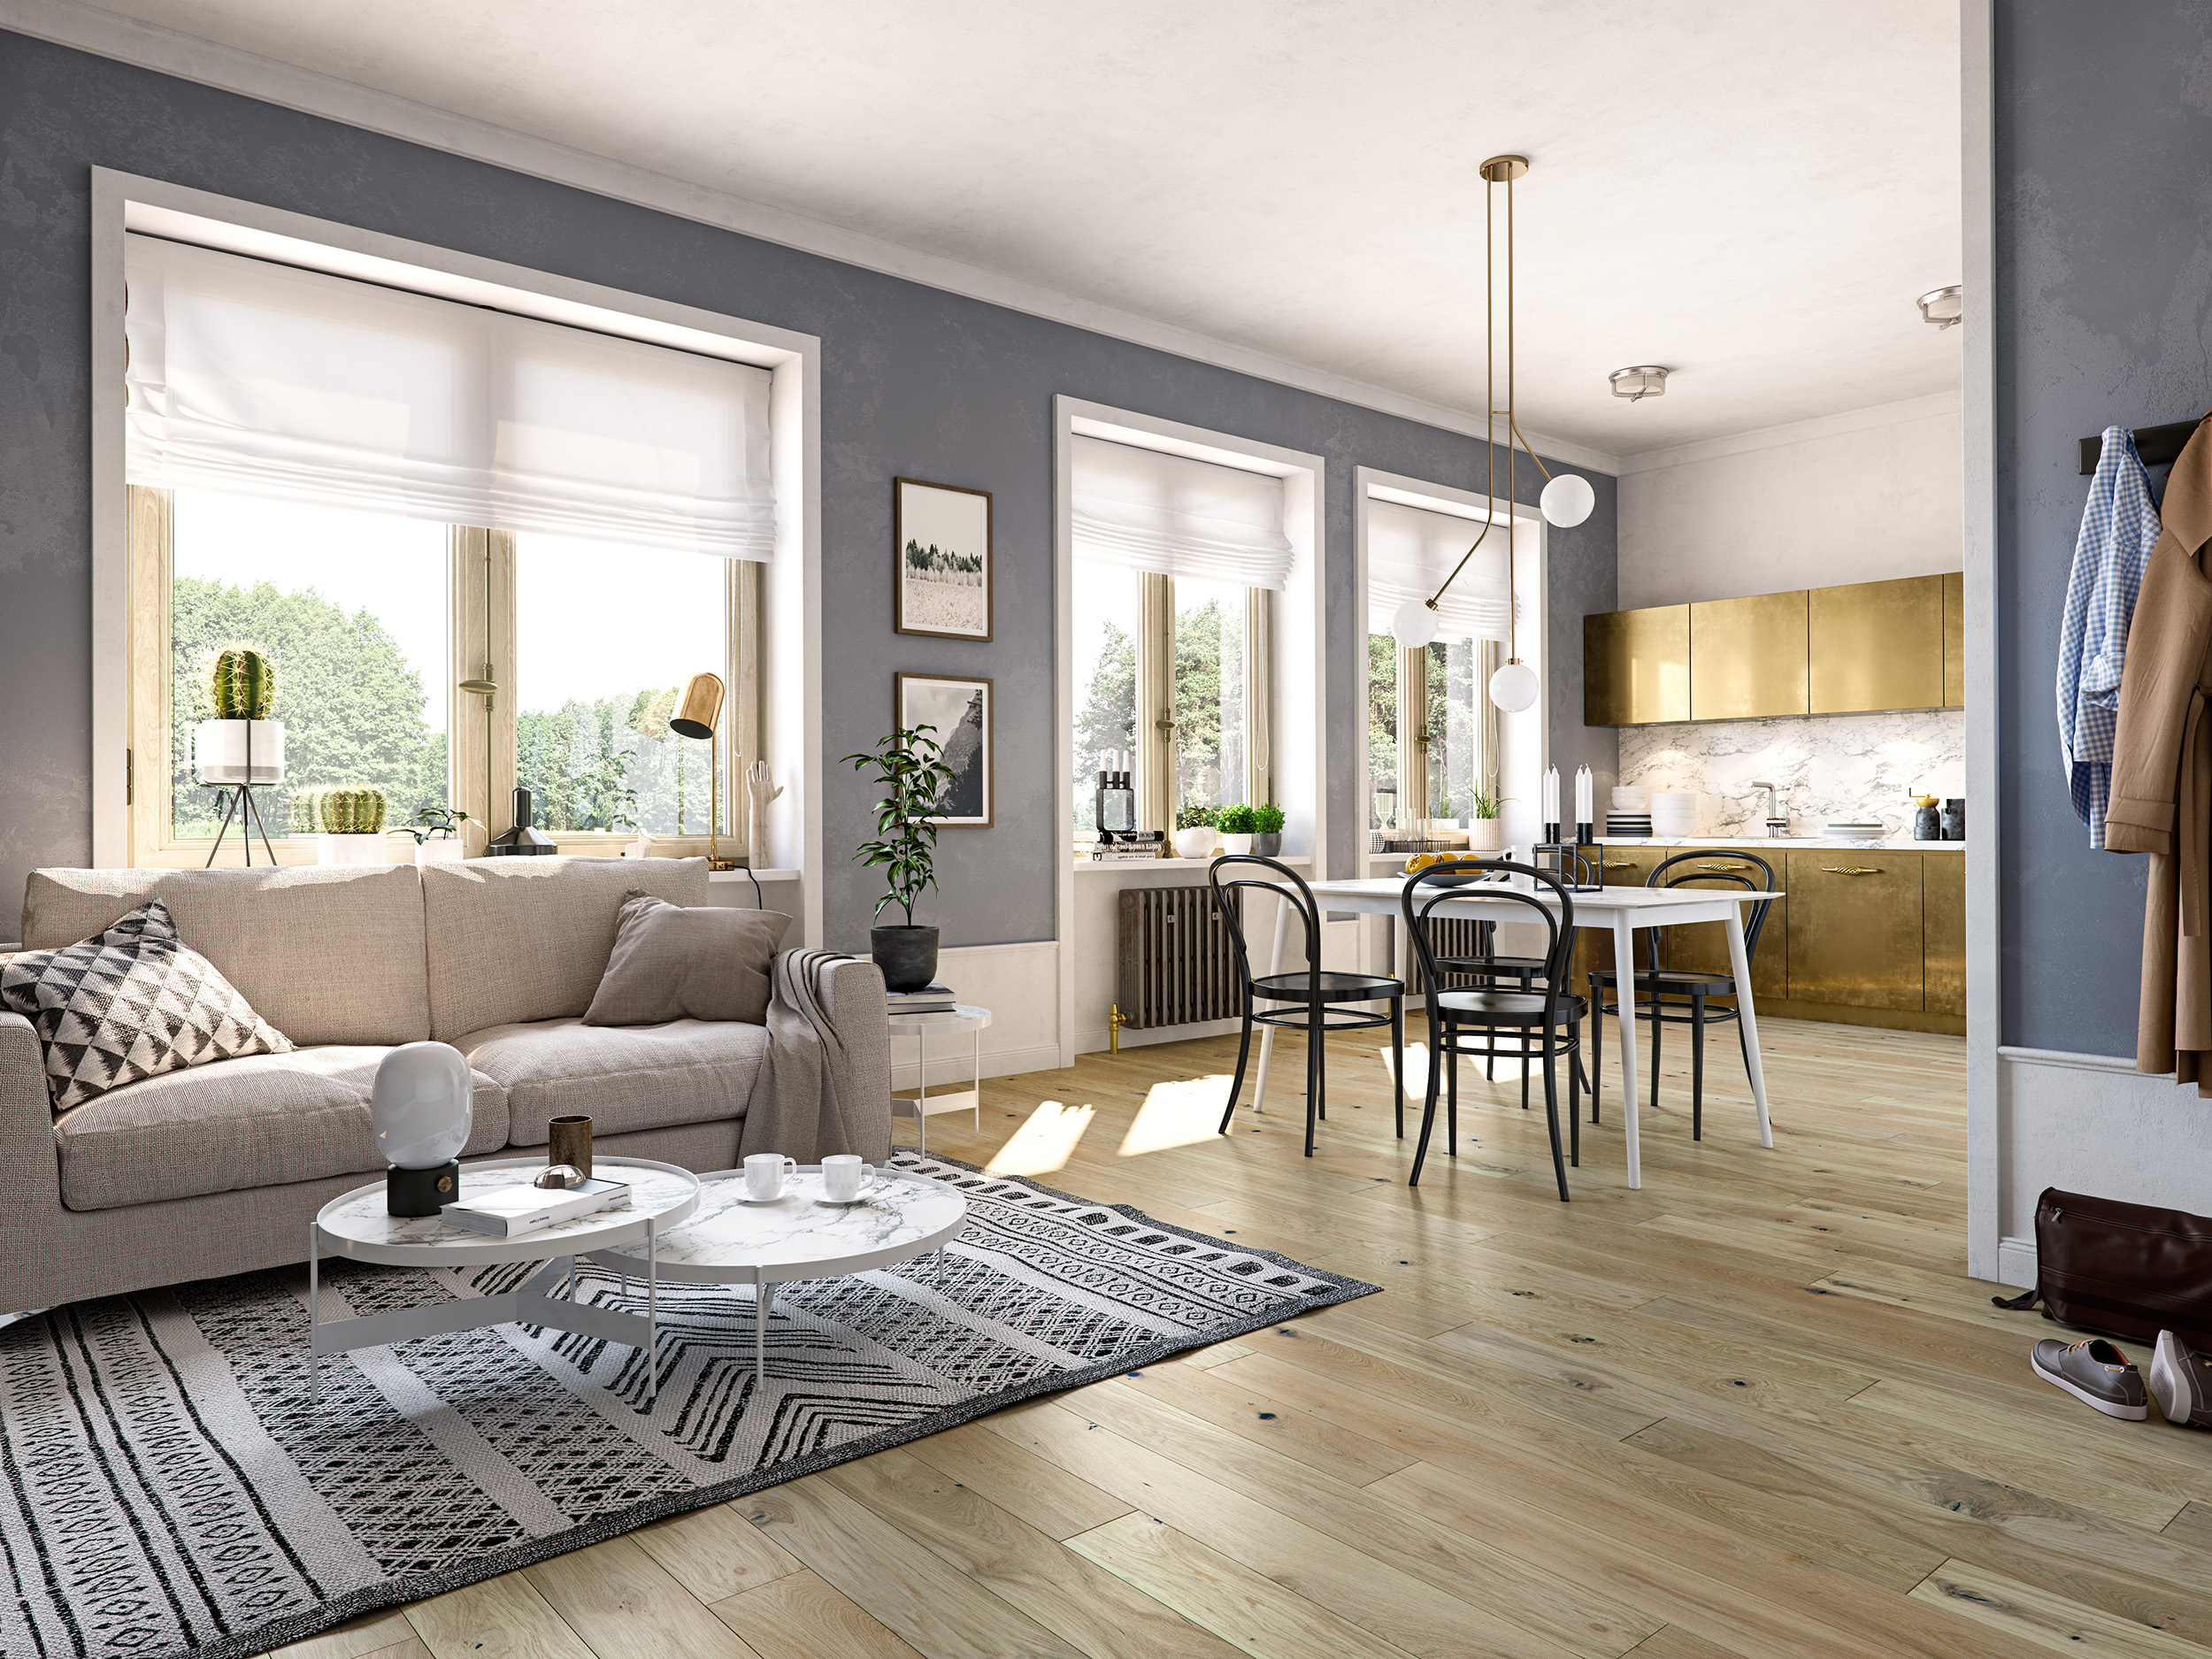 Best Inexpensive Wood Flooring For Living Room